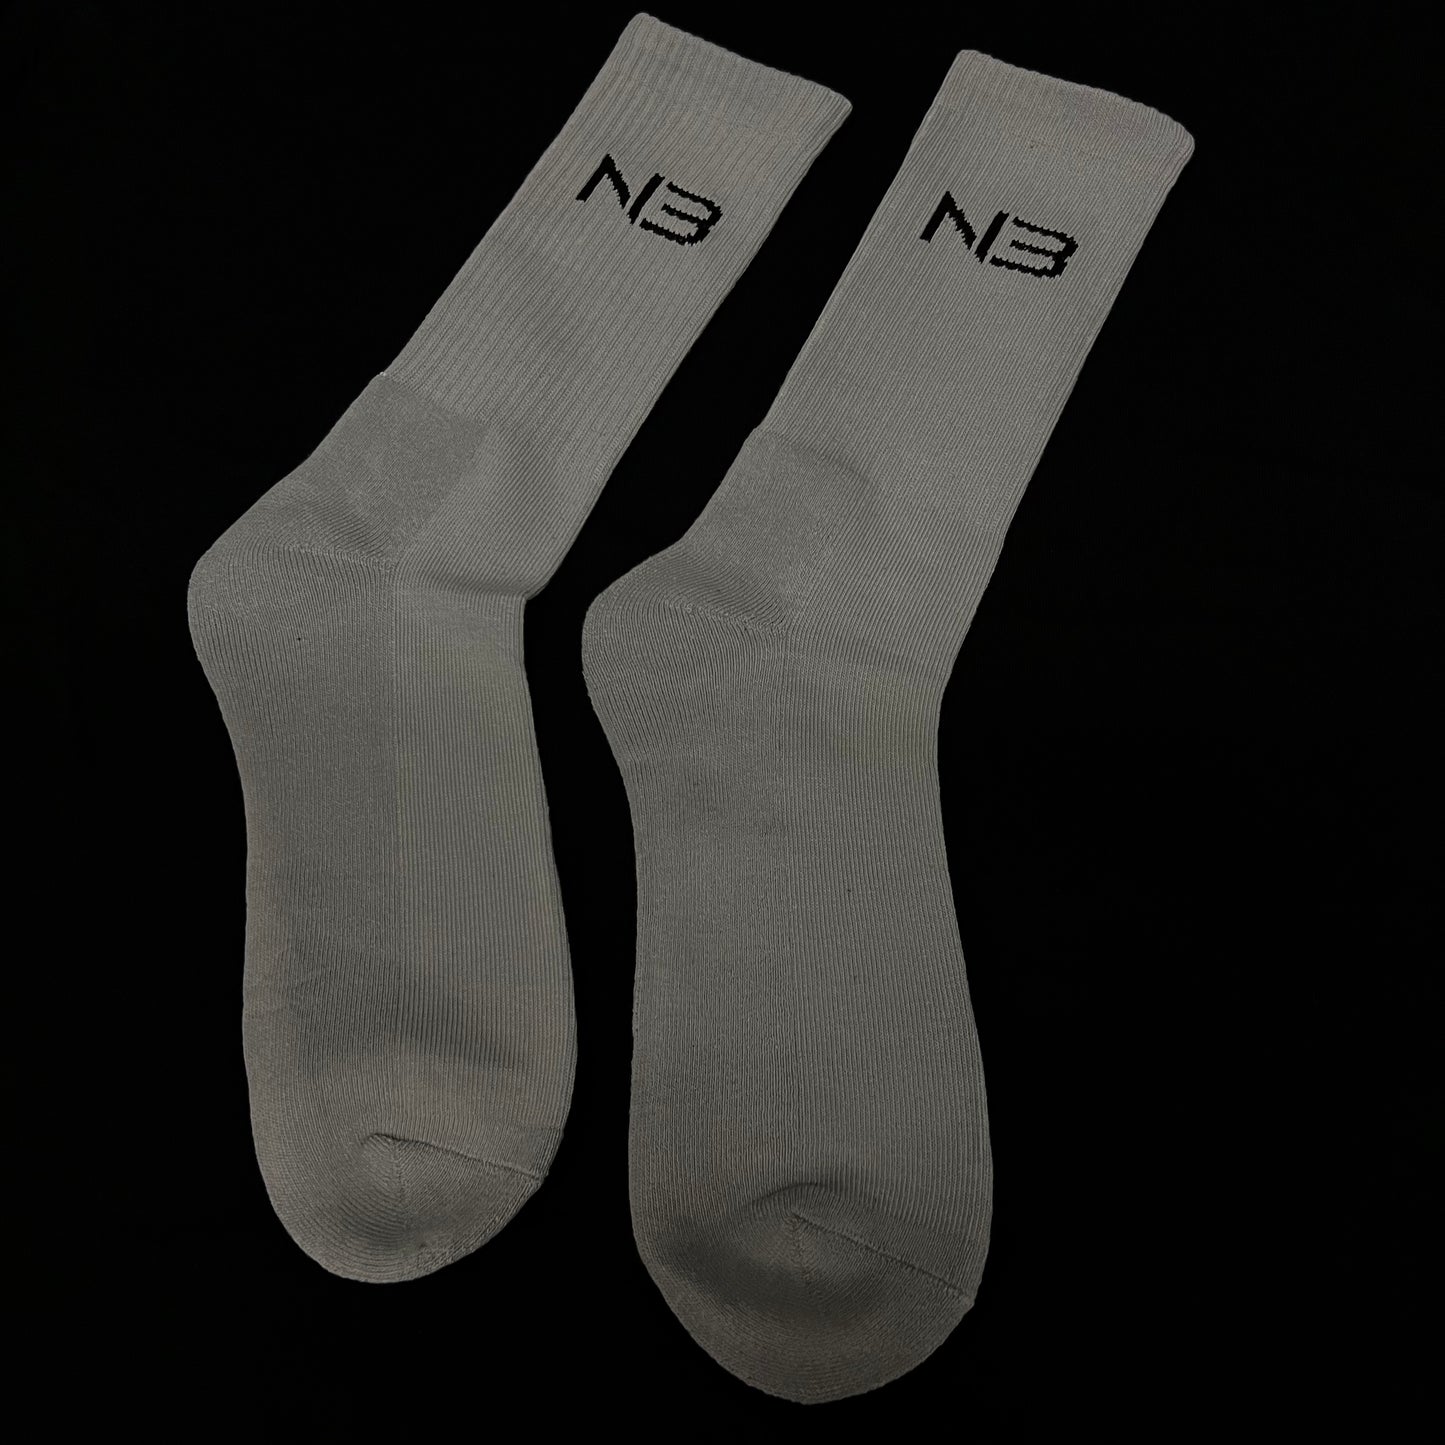 NB Socks(2 pairs)